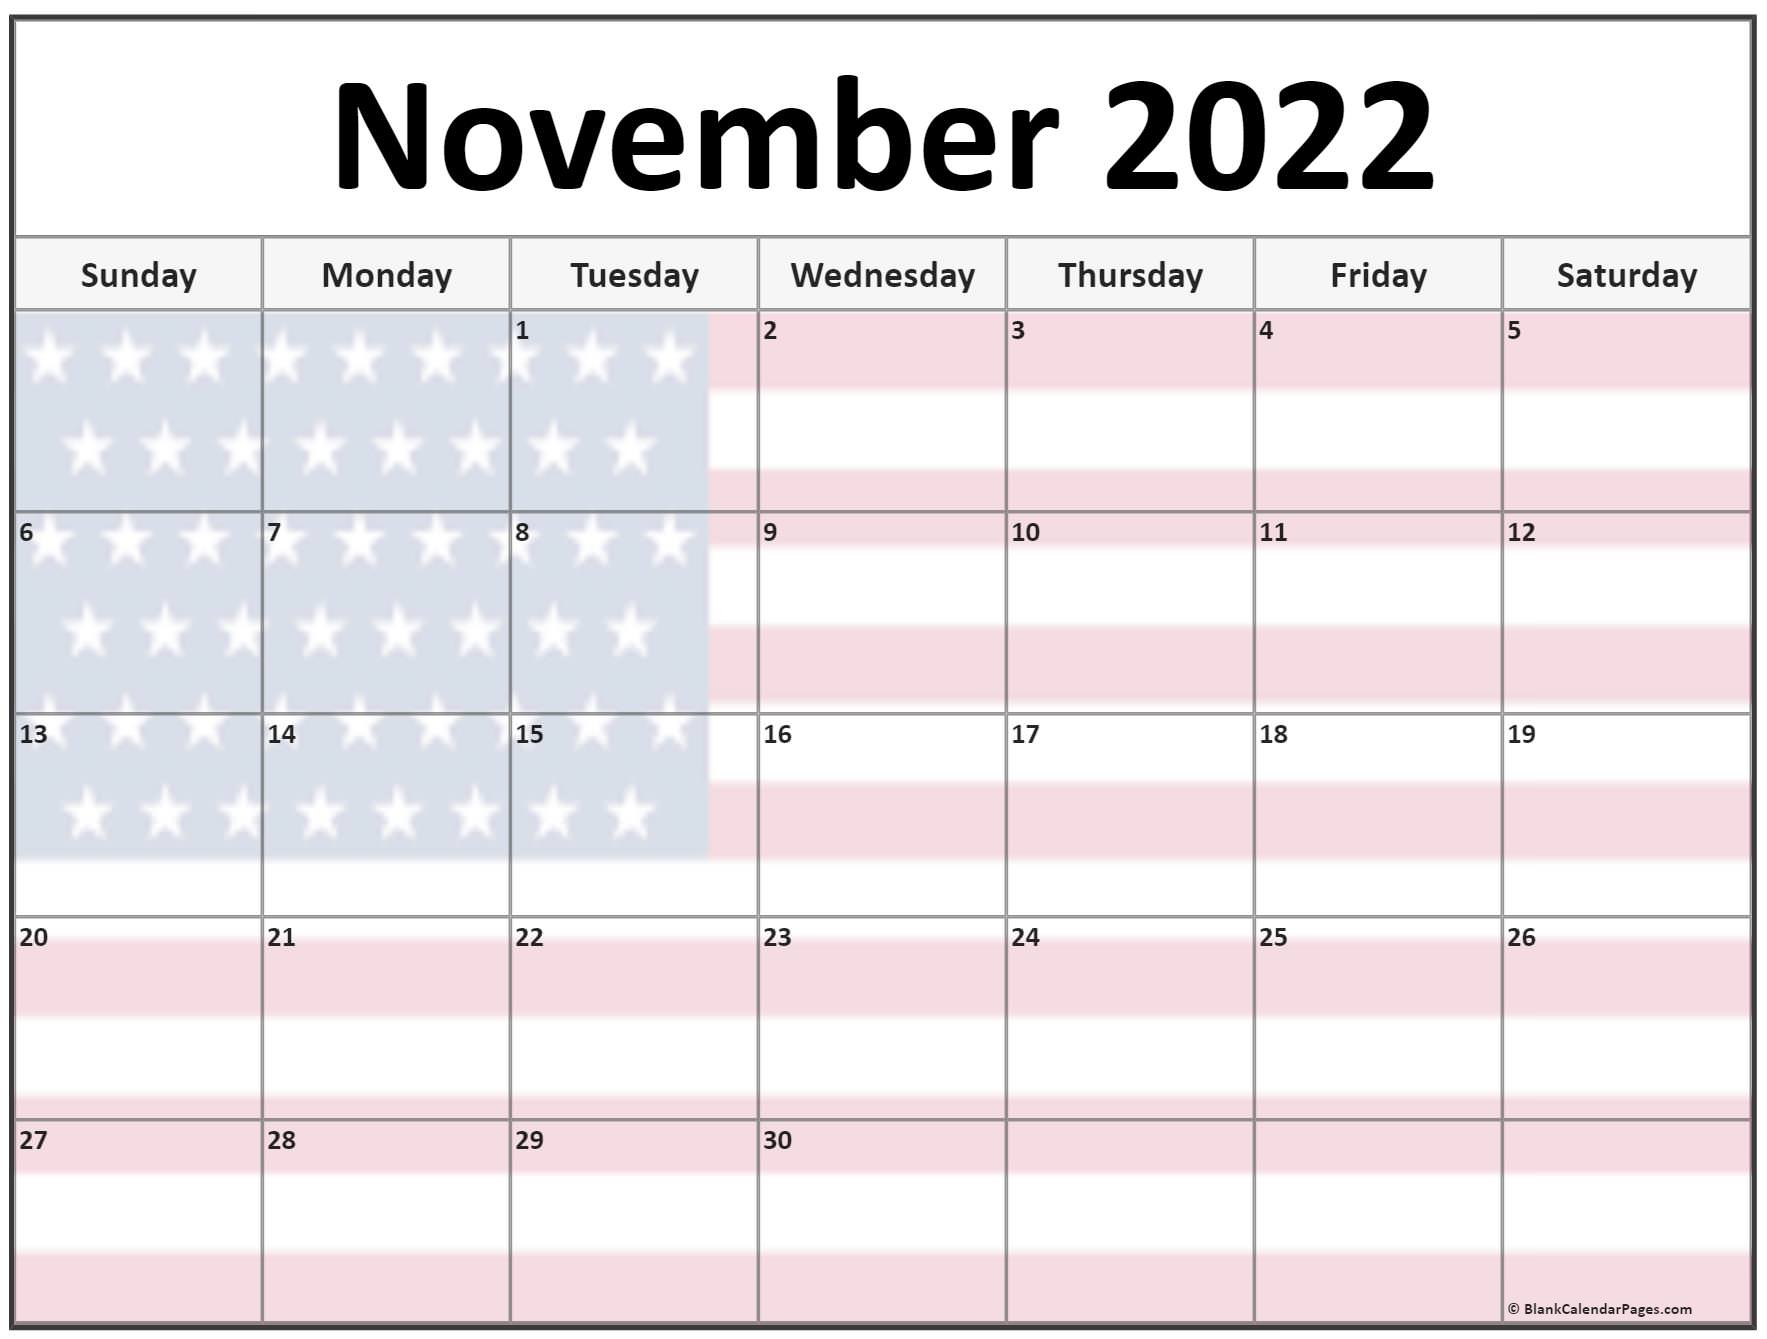 Catch November 2022 Blank Calendar